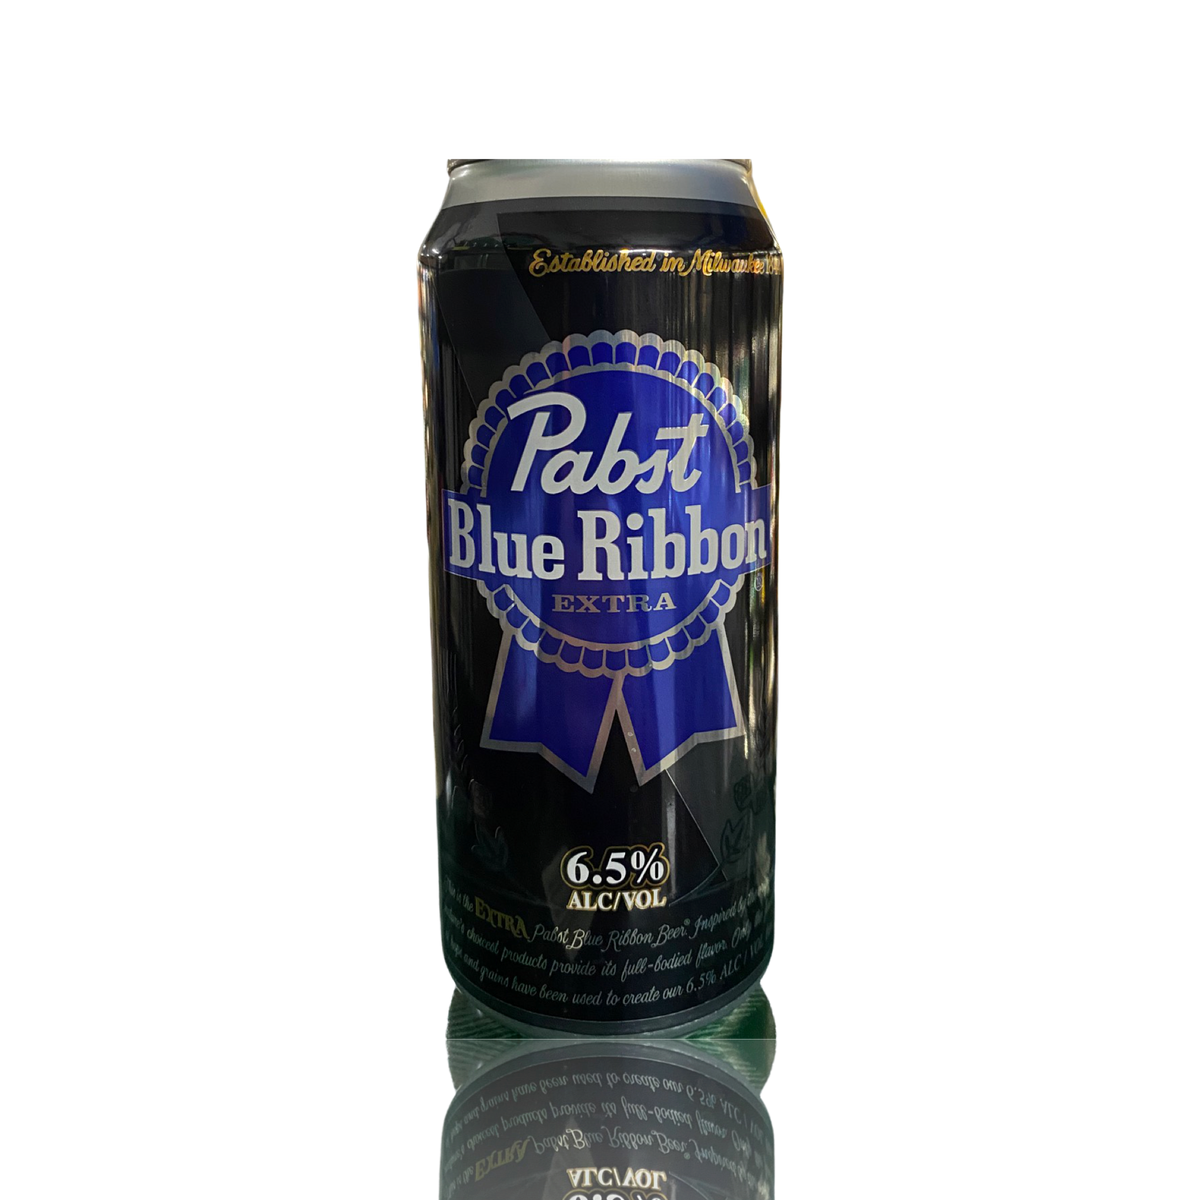 Hobart :: An Advanced Amateur Reviews Pabst Blue Ribbon - A Beer